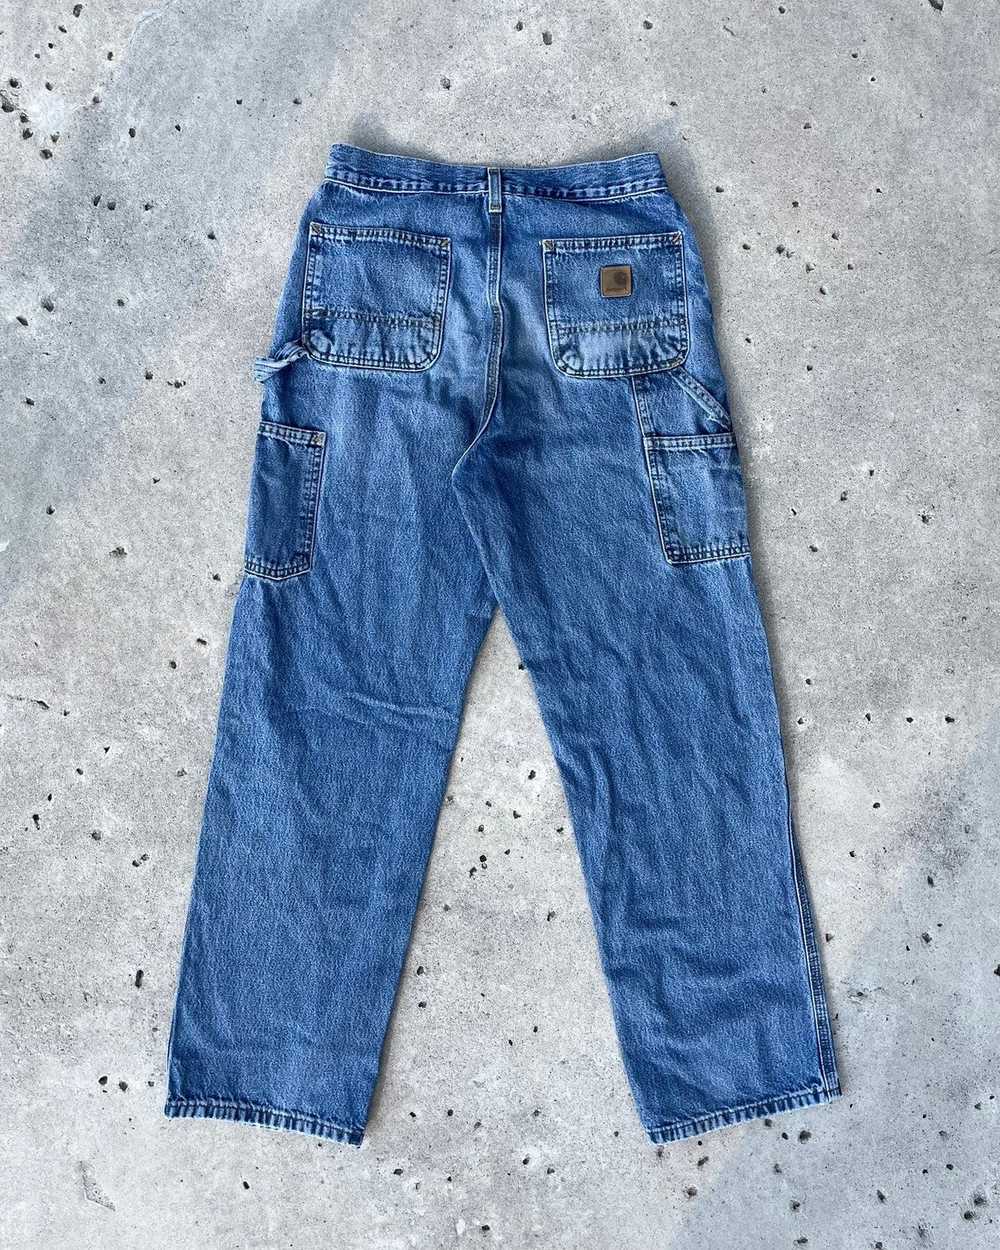 Vintage Vintage Carhartt dungaree jeans - image 2